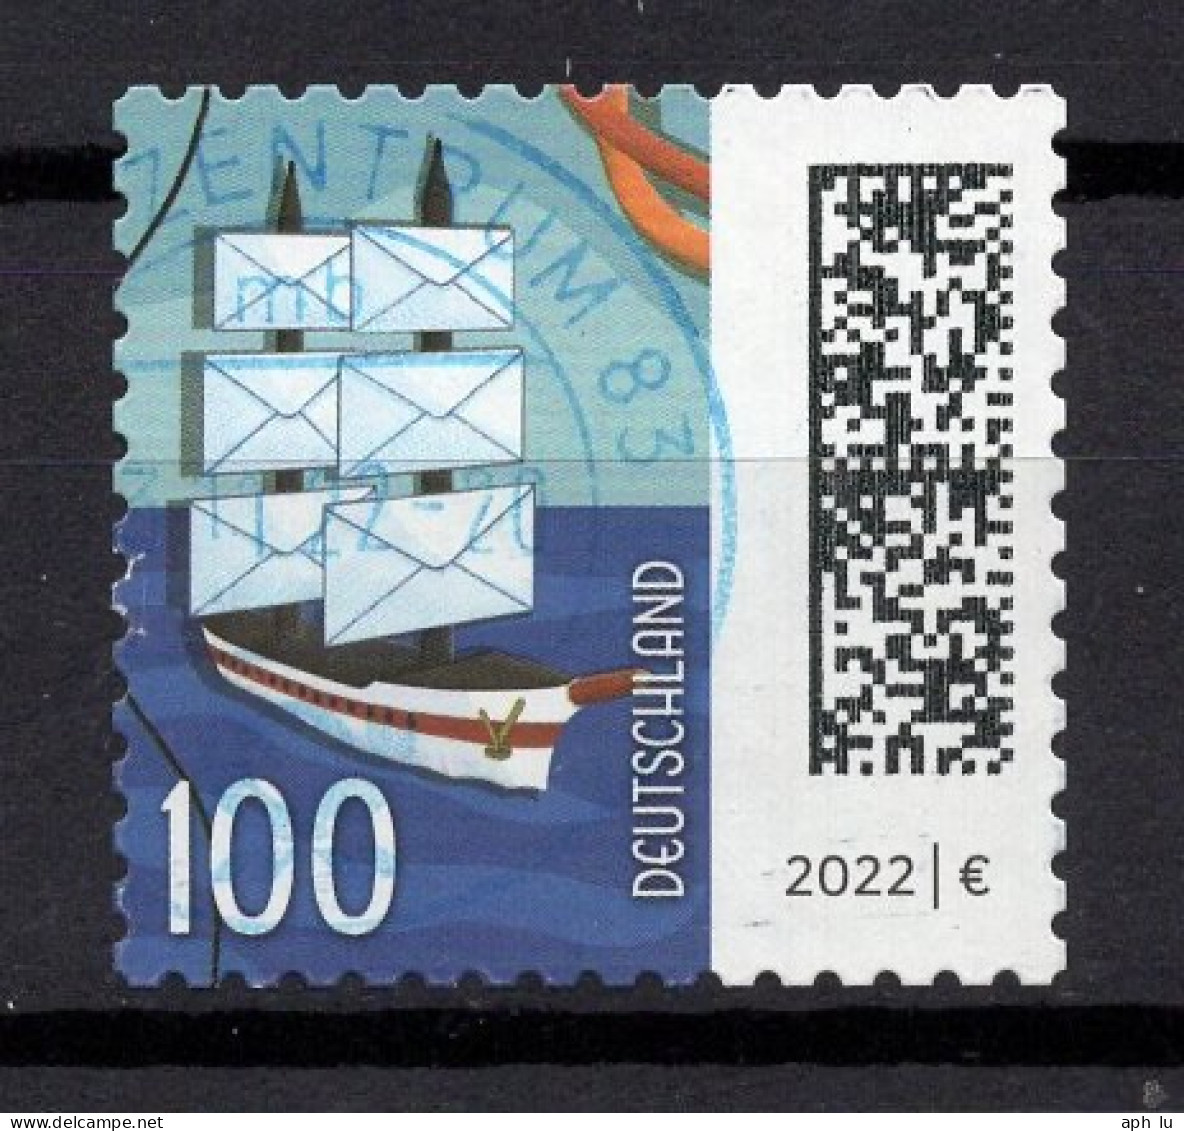 Marke 2022 Gestempelt (h640205) - Used Stamps